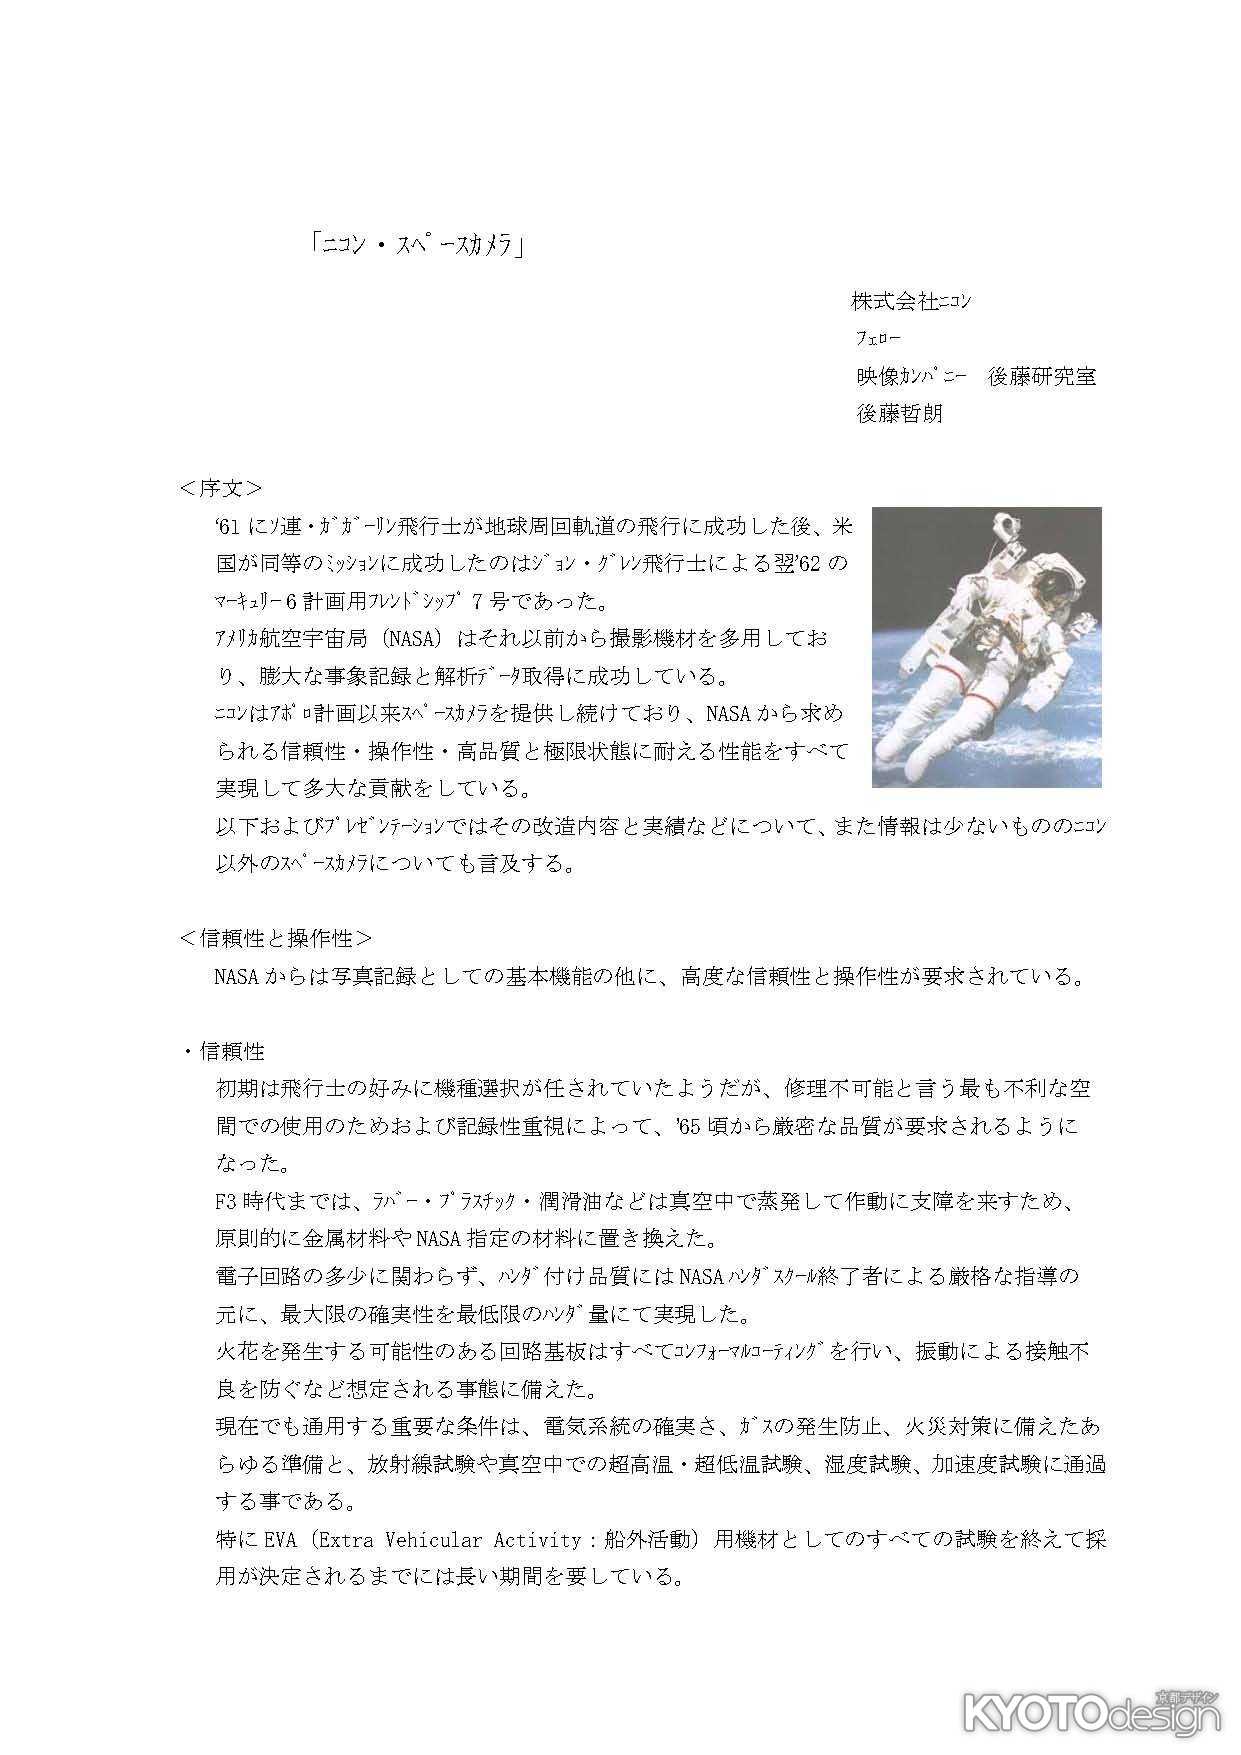 Kyotographie2015国際写真展 株式会社ニコン フェロー後藤哲朗氏講演「ニコン・スペースカメラ」